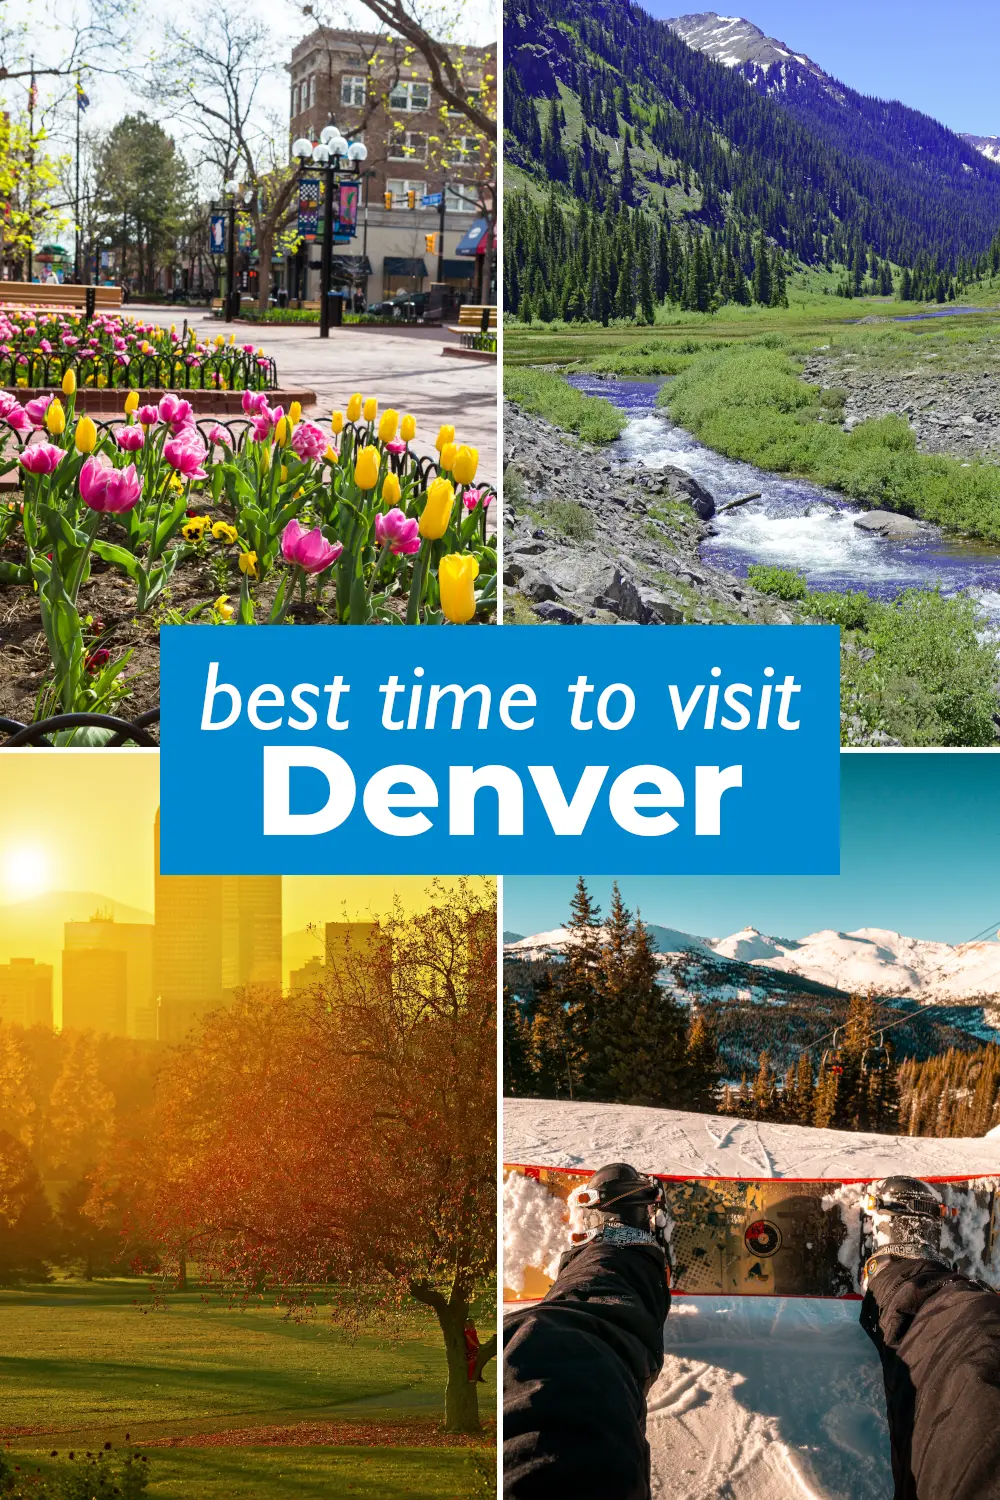 Mejor época para visitar Denver - guía mes a mes